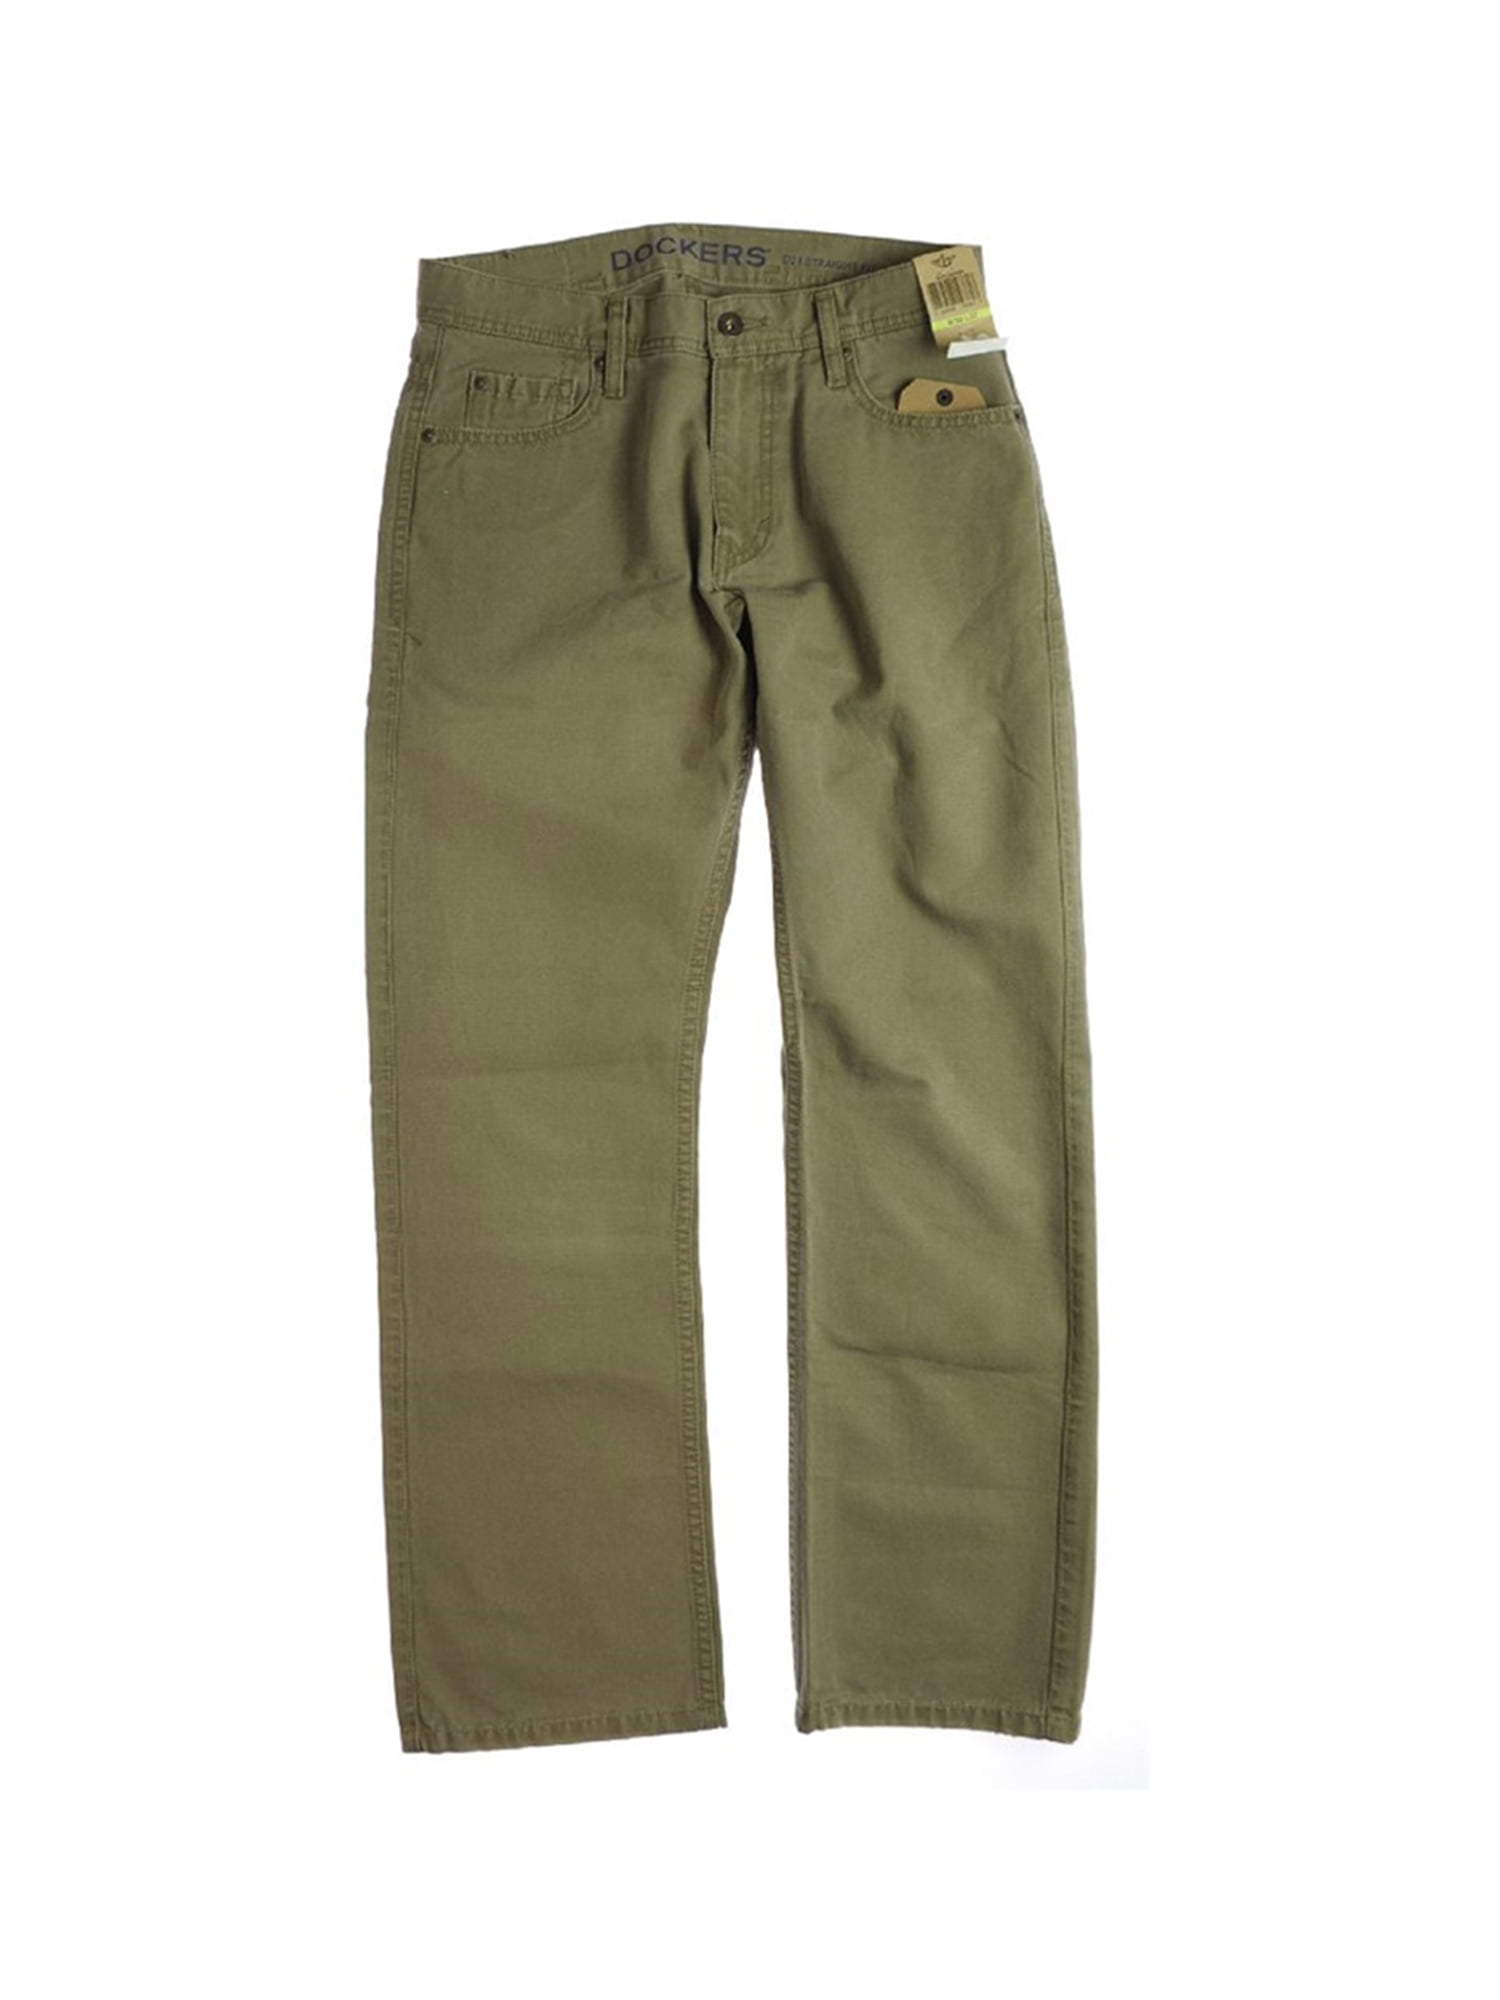 Dockers Mens 5 Pocket Fi Straight Leg Jeans brown 30x30 | Walmart Canada